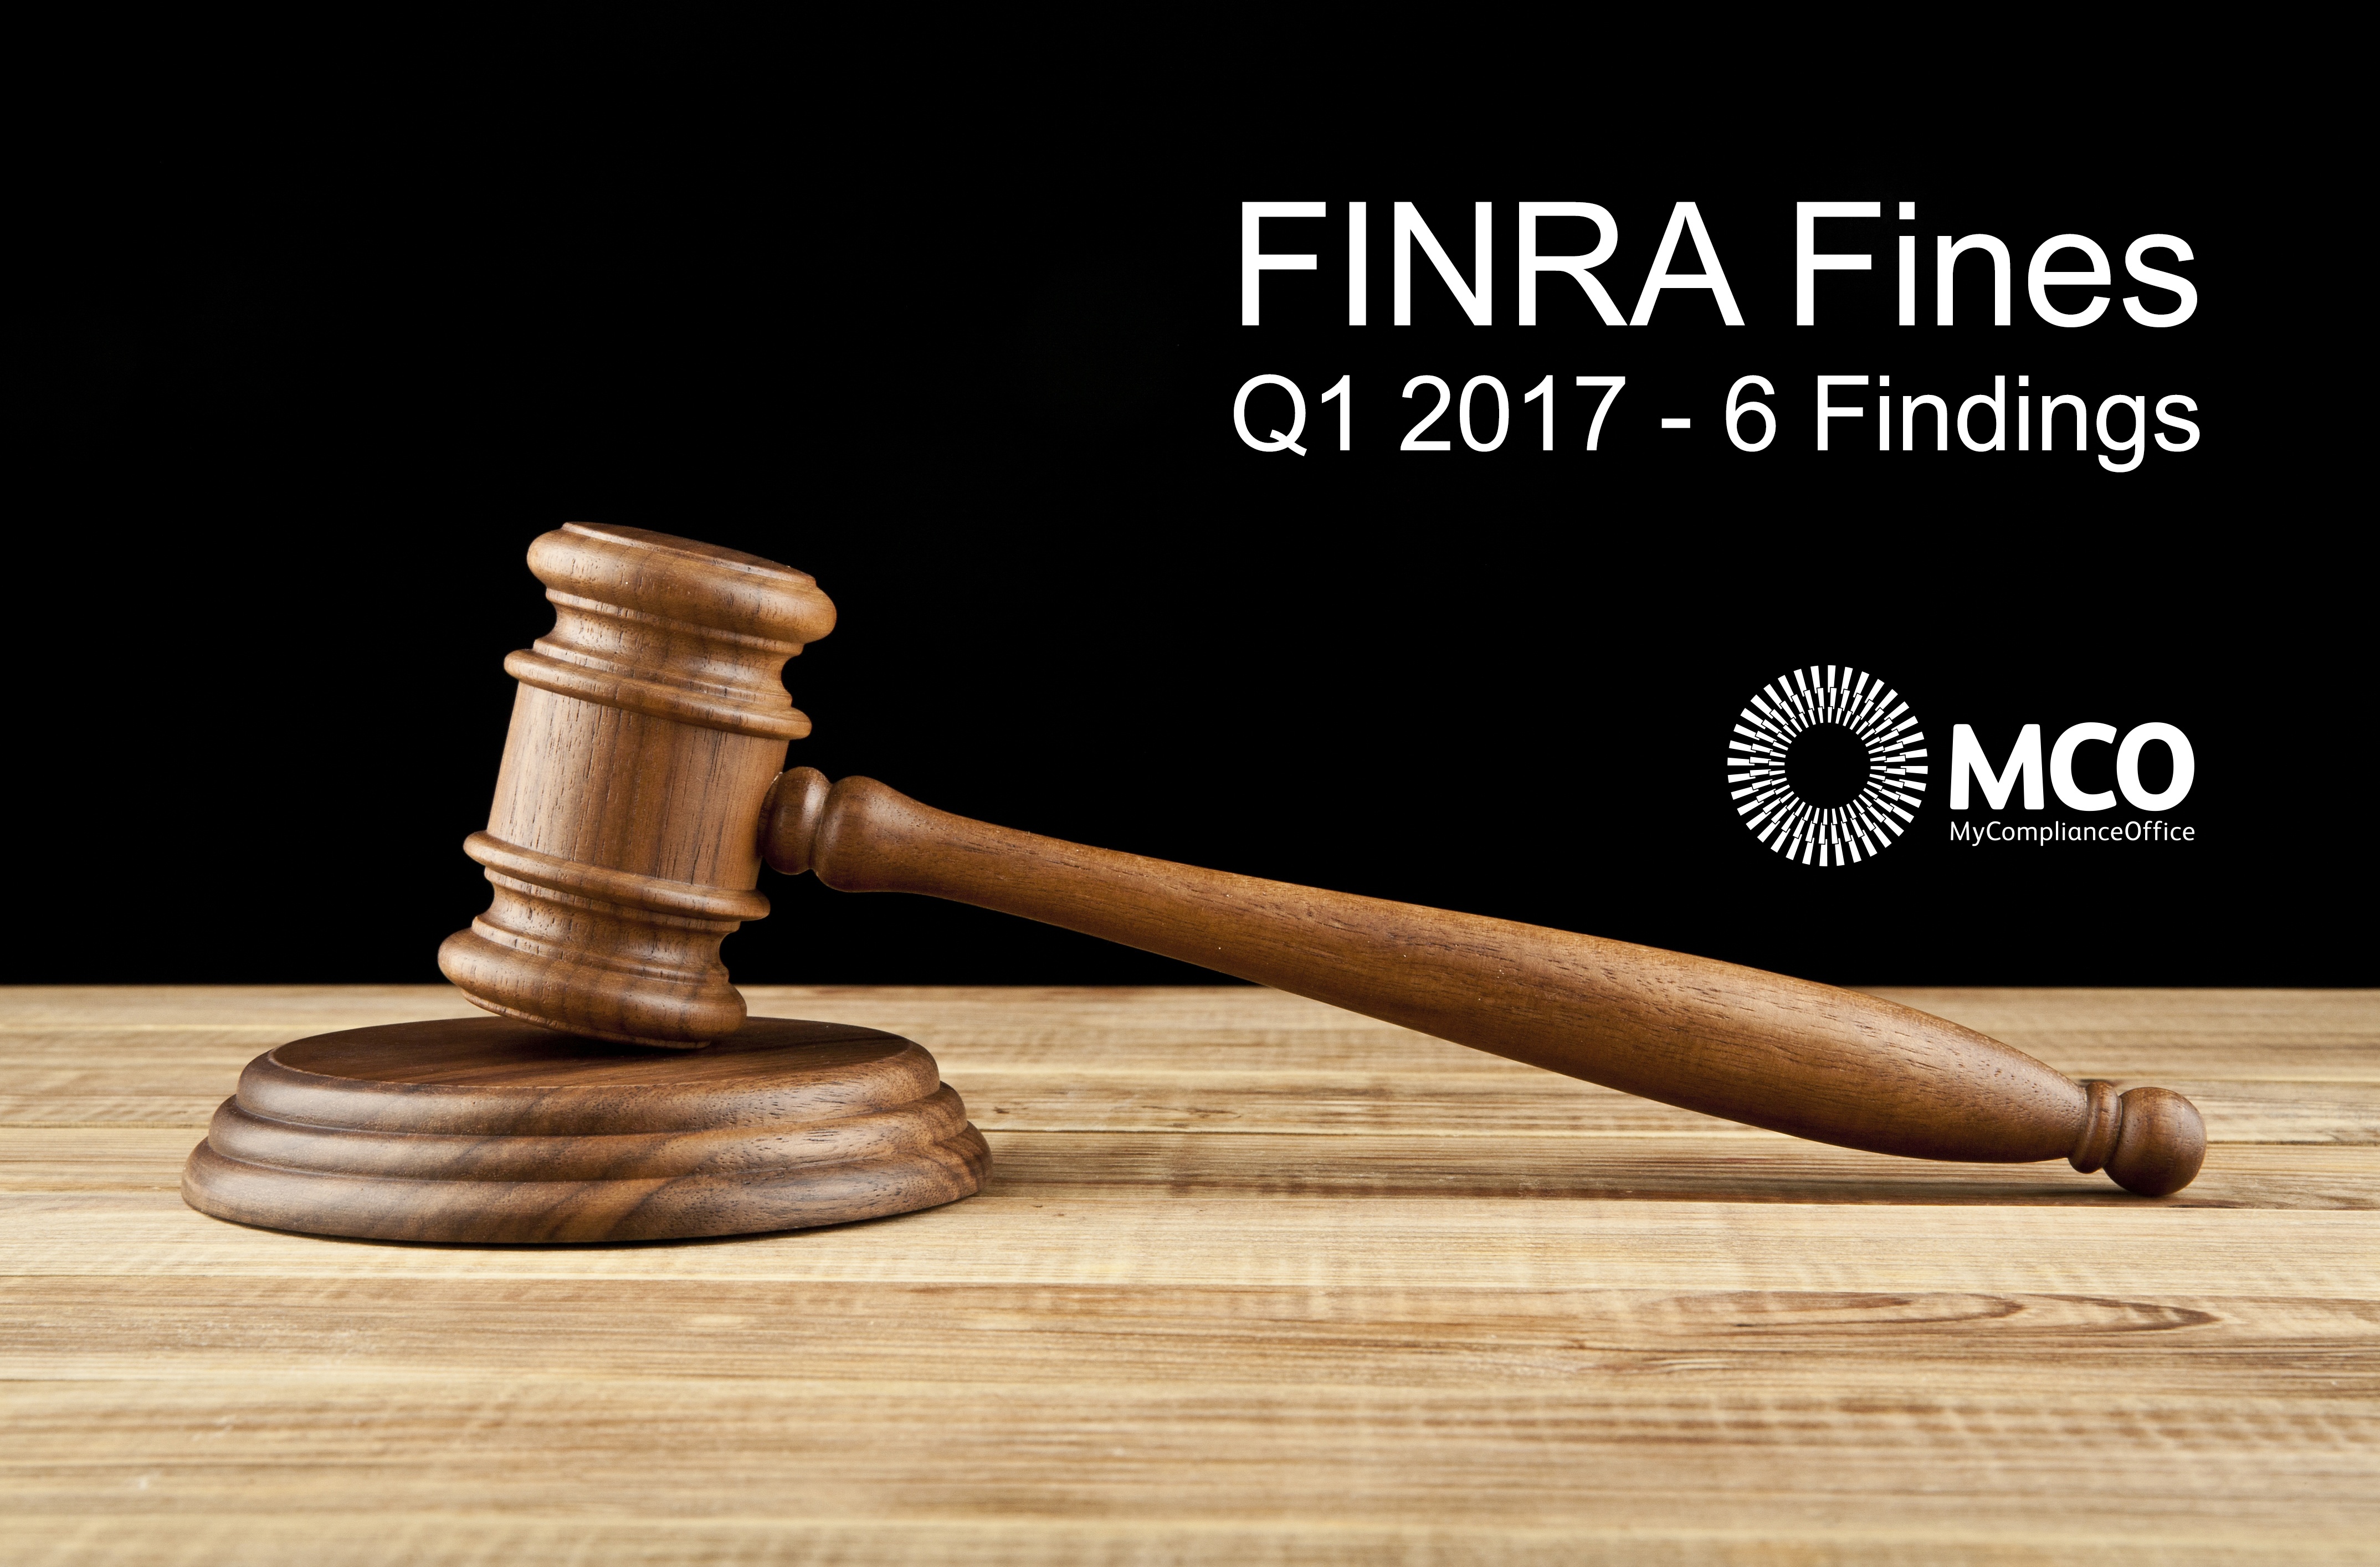 FINRA_Fines_2017.jpg